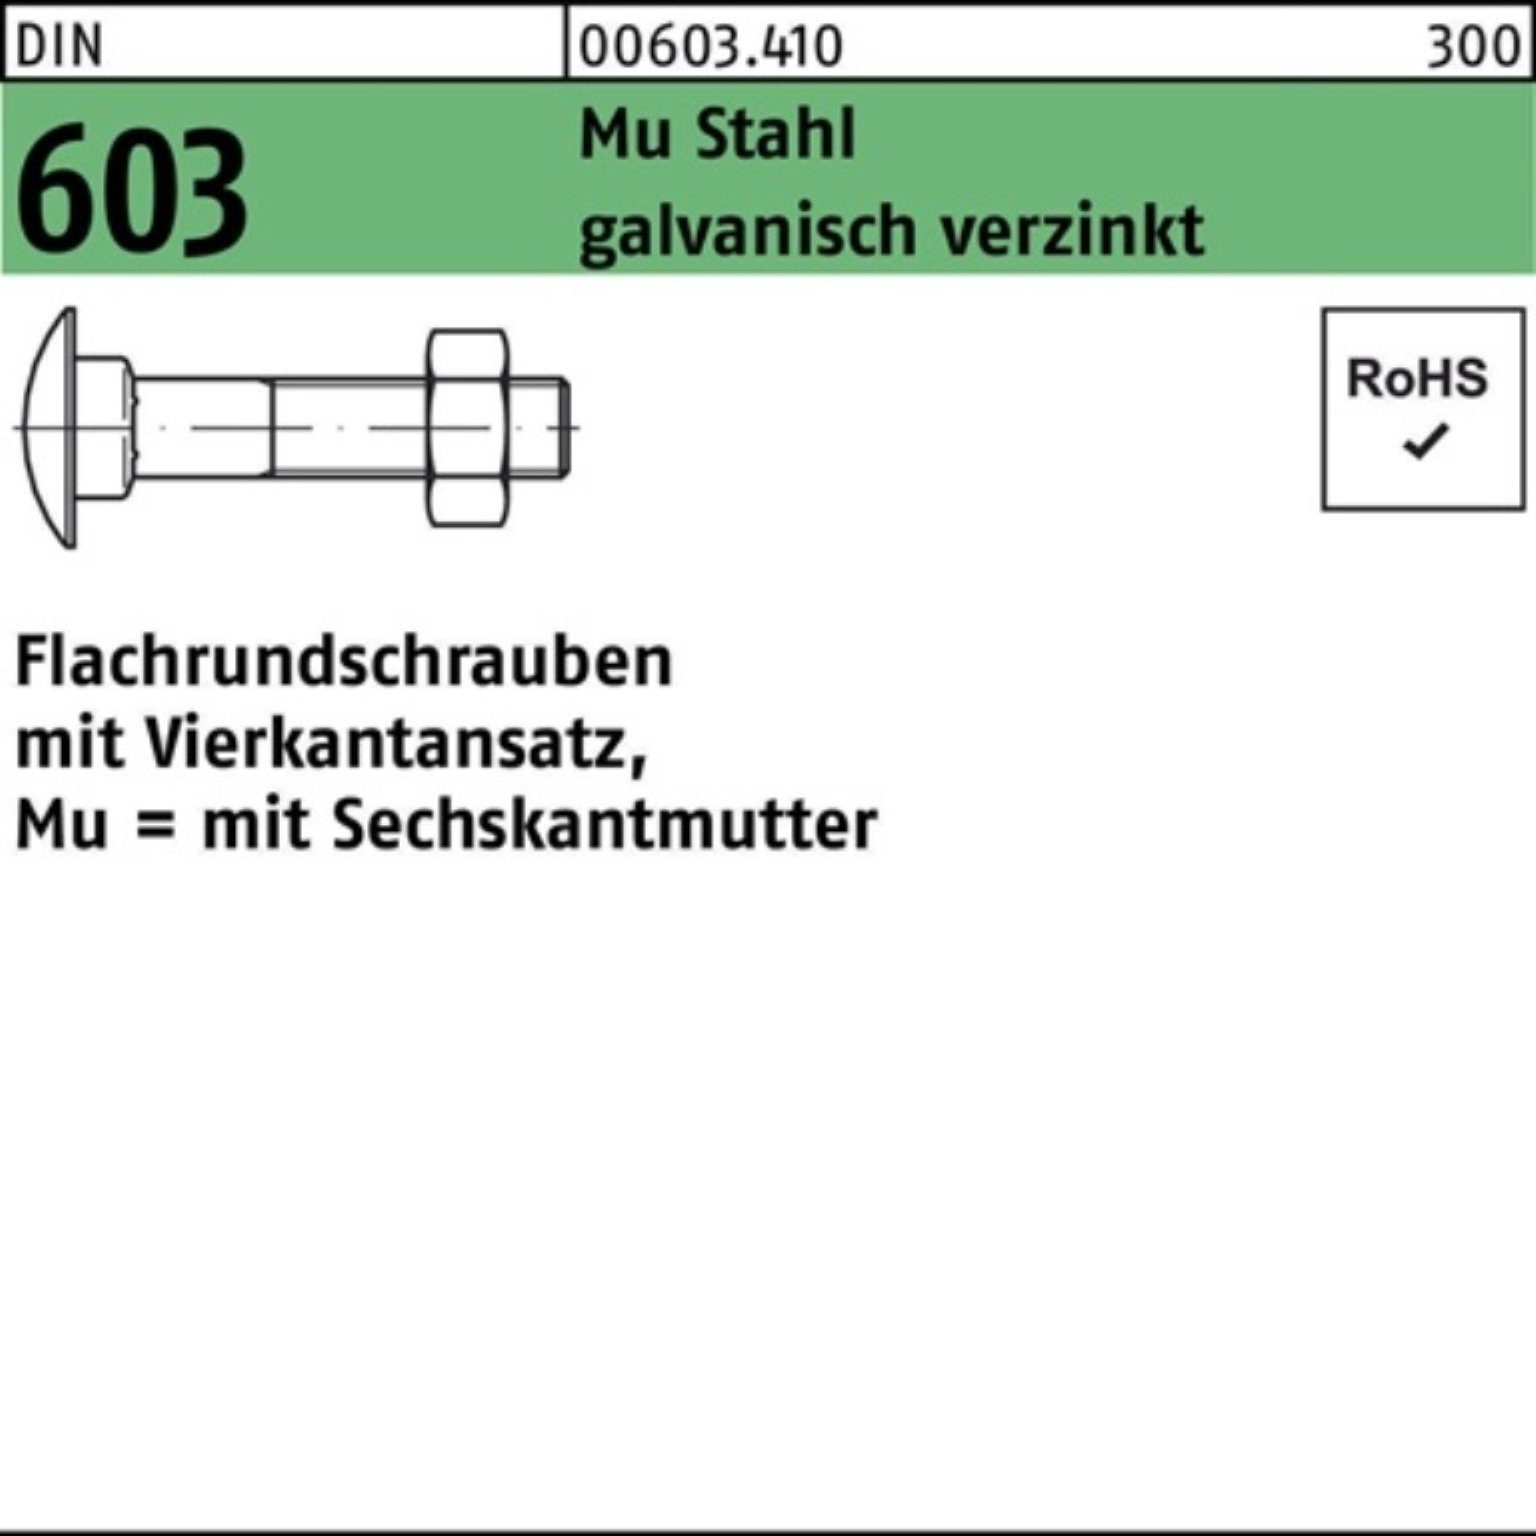 Reyher Schraube 500er Pack Flachrundschraube DIN 603 Vierkantansatz/6-ktmutter M5x25 M